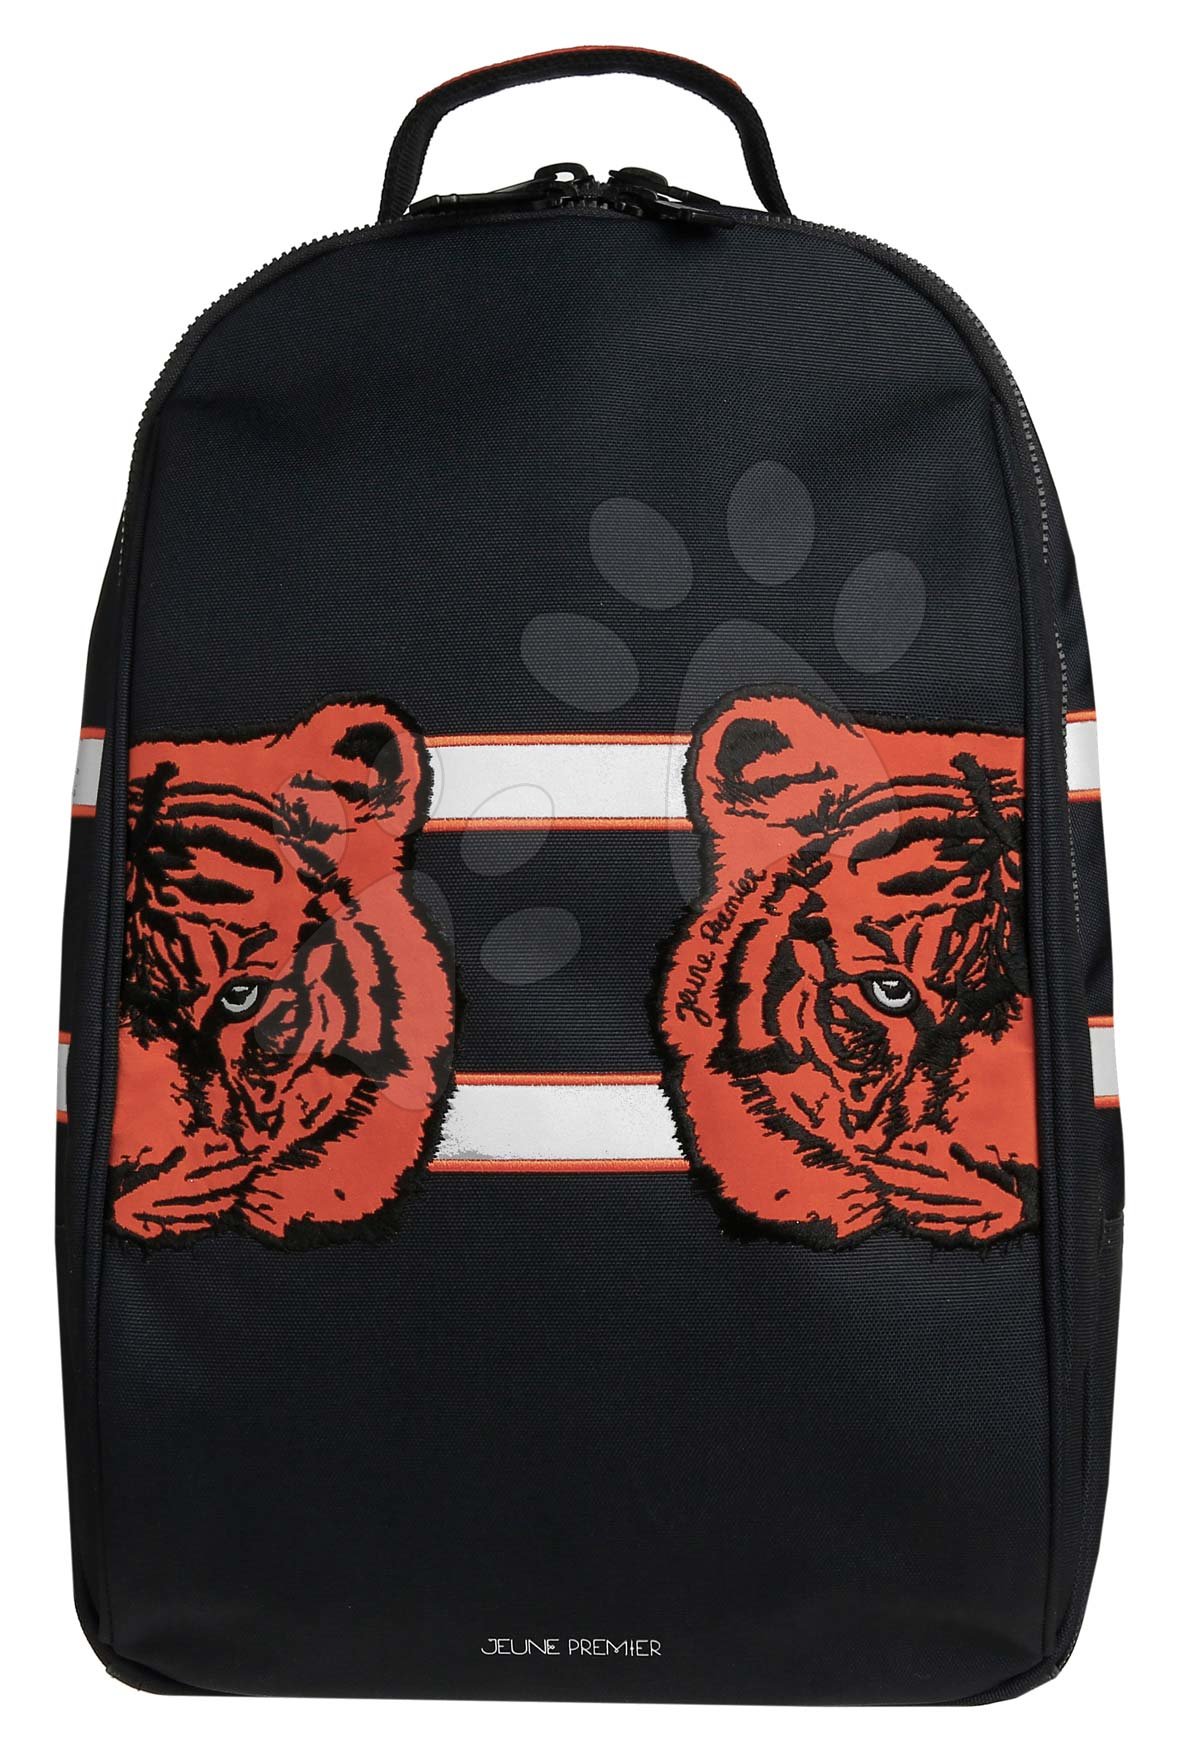 Iskolai hátizsák Backpack James Tiger Twins Jeune Premier ergonomikus luxus kivitel 42*30 cm